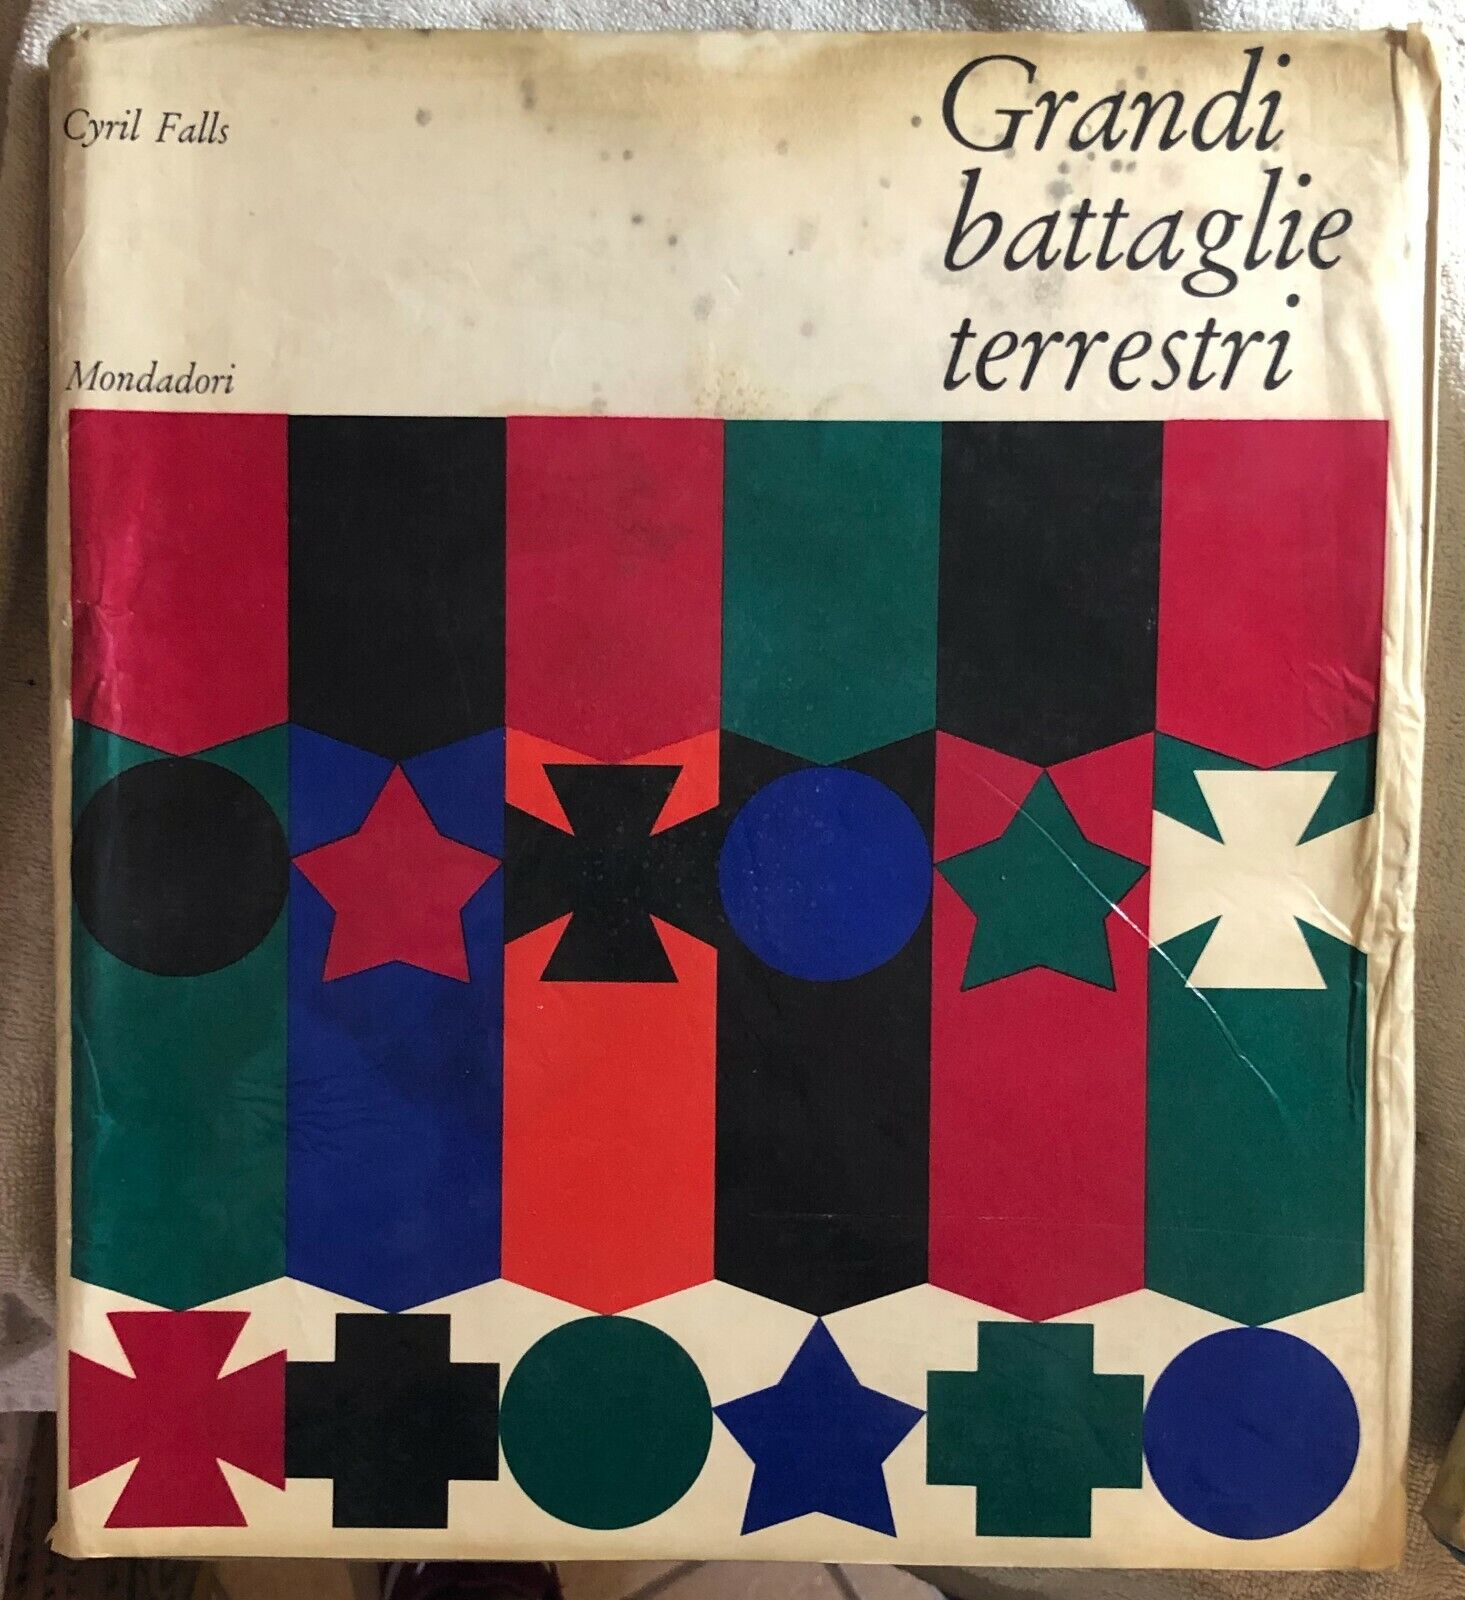 Grandi battaglie terrestri di Cyril Falls,  1964,  Mondadori